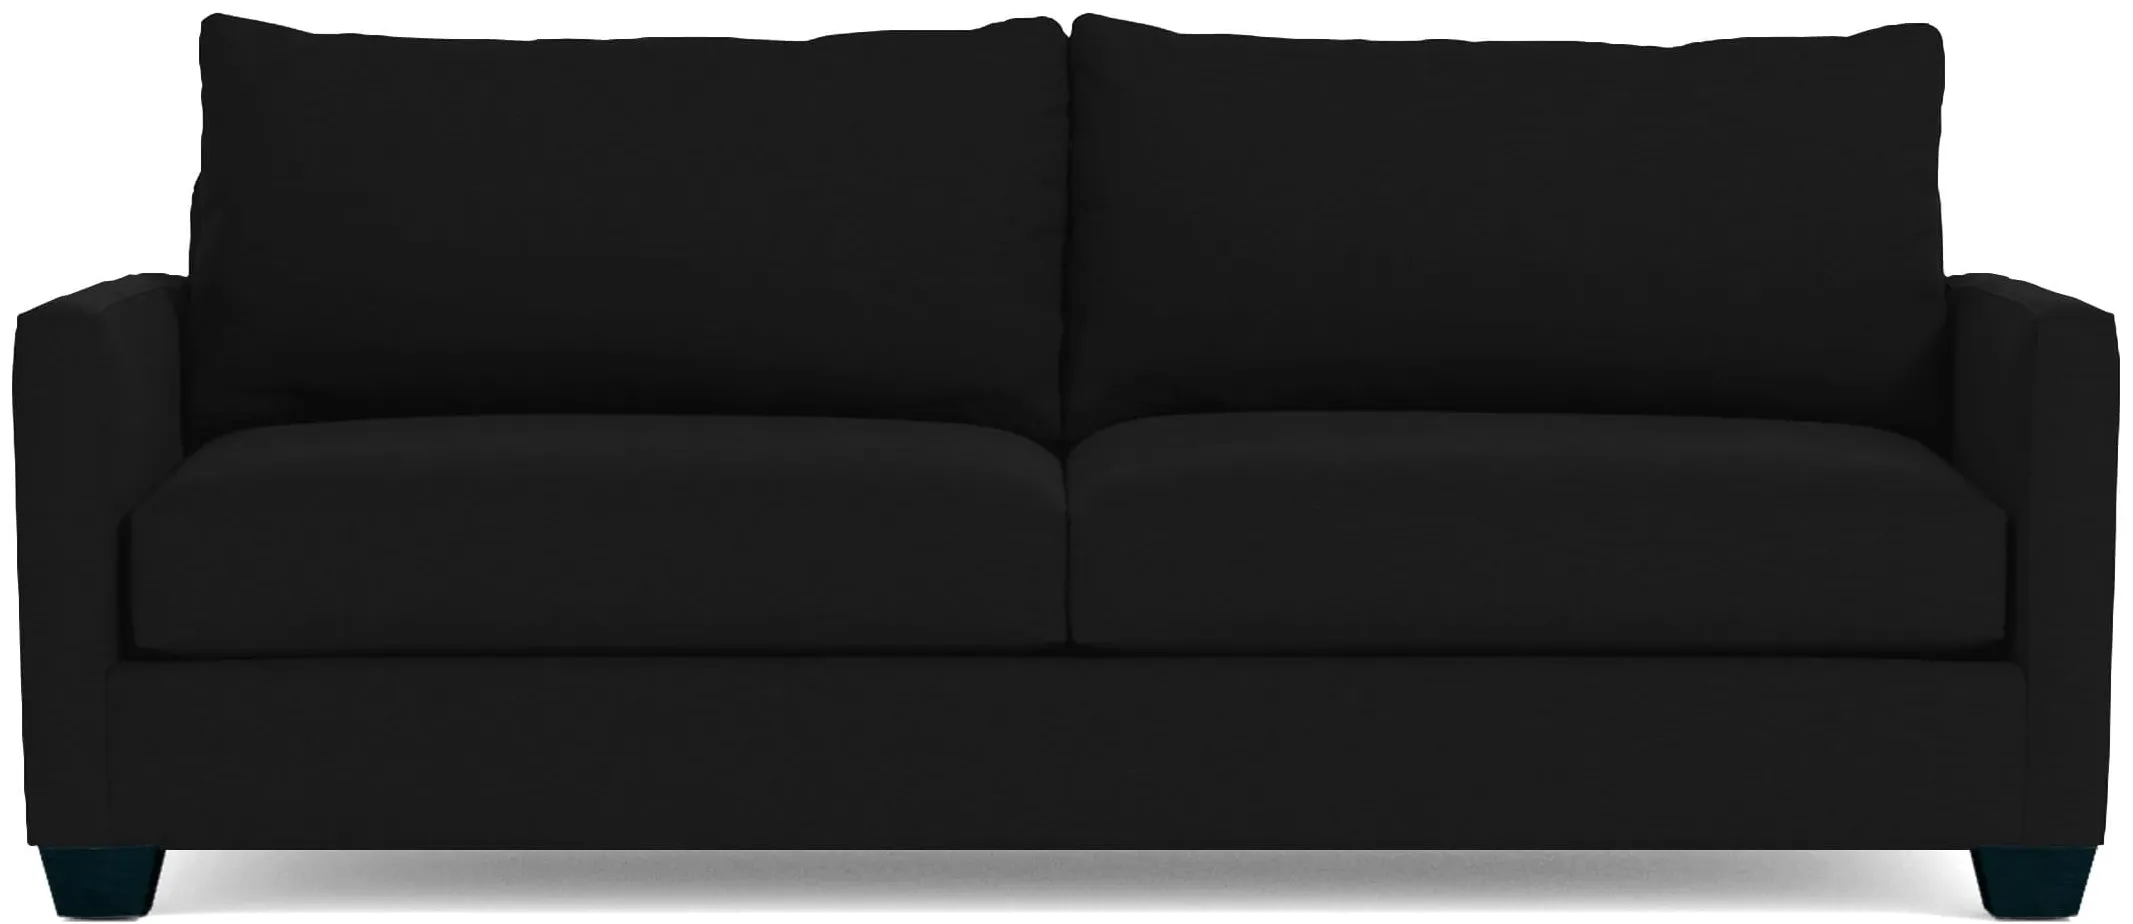 Tuxedo Queen Size Sleeper Sofa Bed